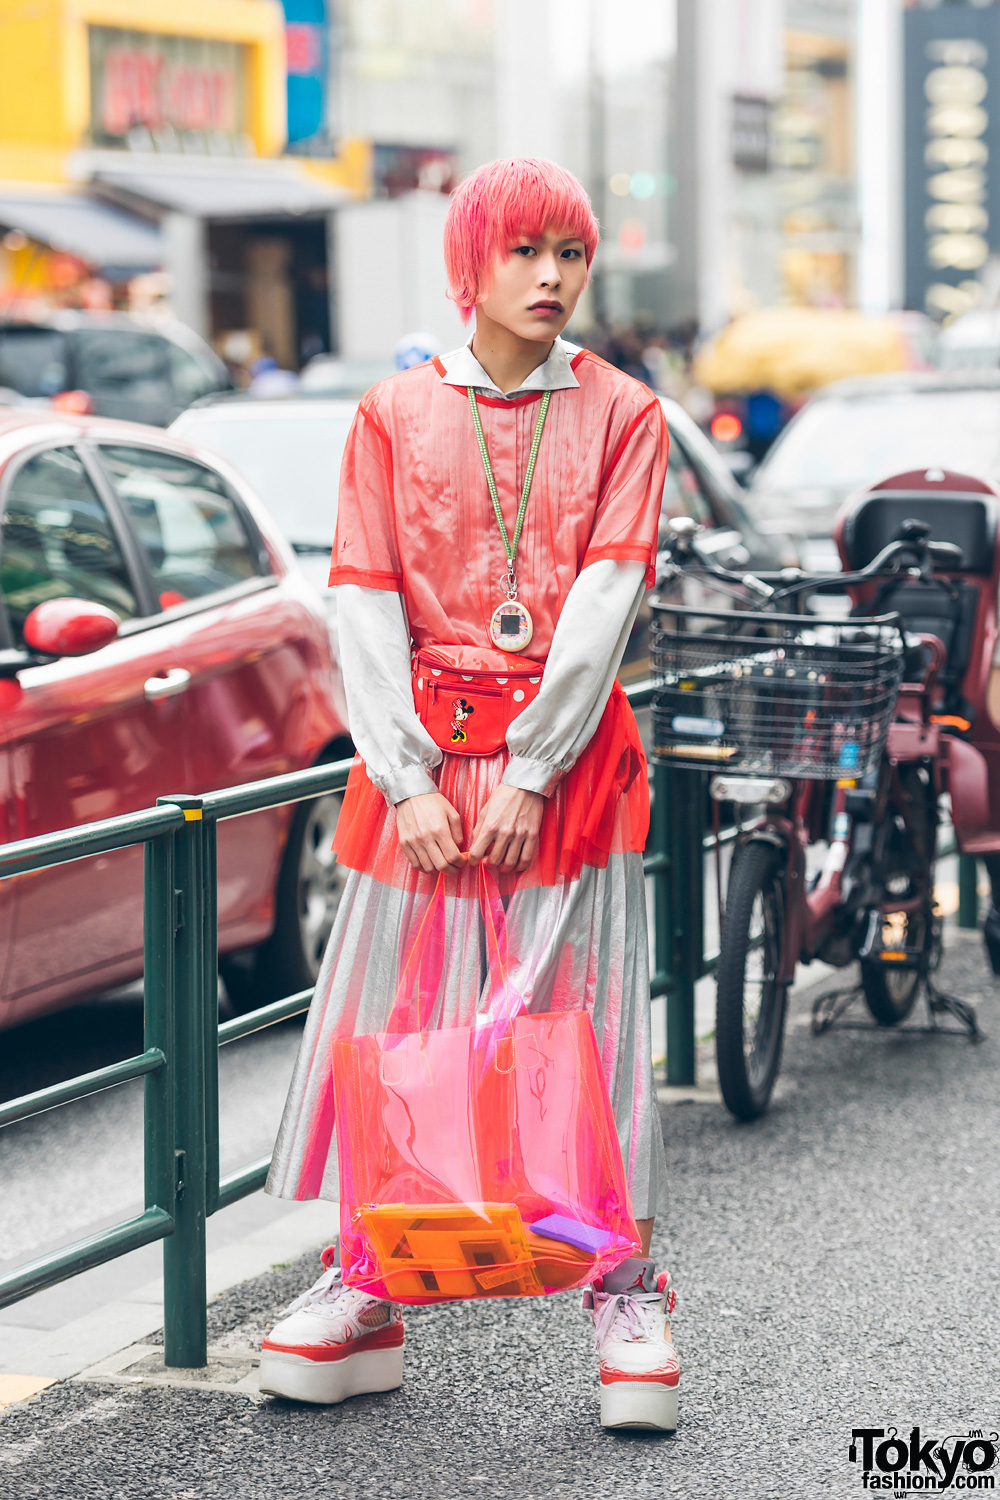 Pink Haired Harajuku Guy in Silver Skirt, Platform Jordans, Tamagotchi & Minnie Mouse